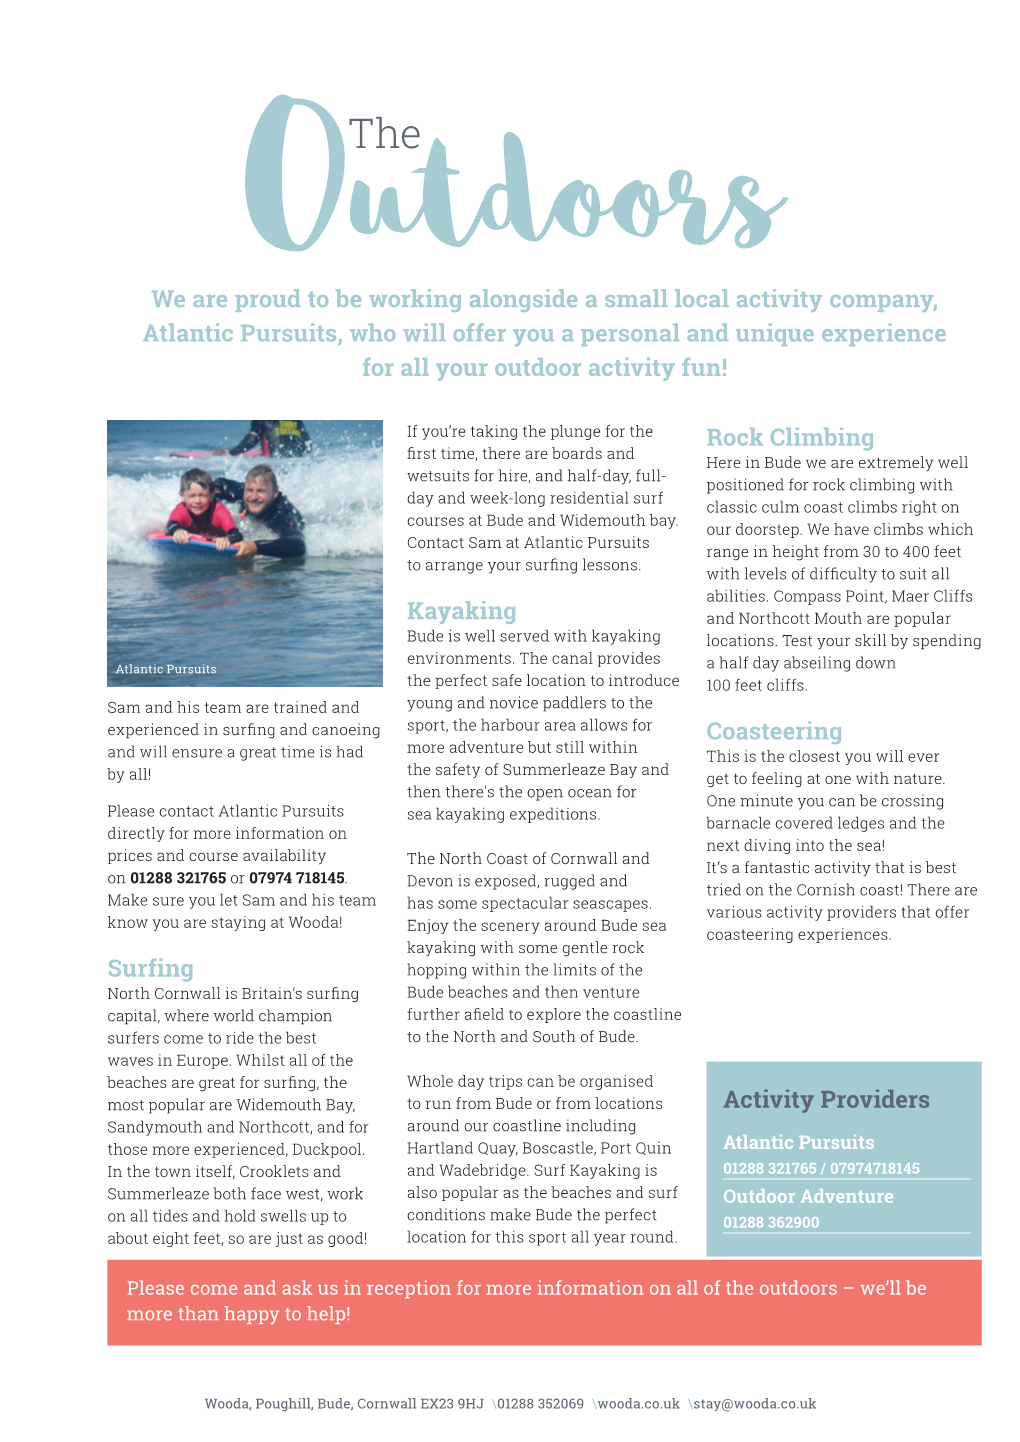 Surfing Kayaking Rock Climbing Coasteering Activity Providers We